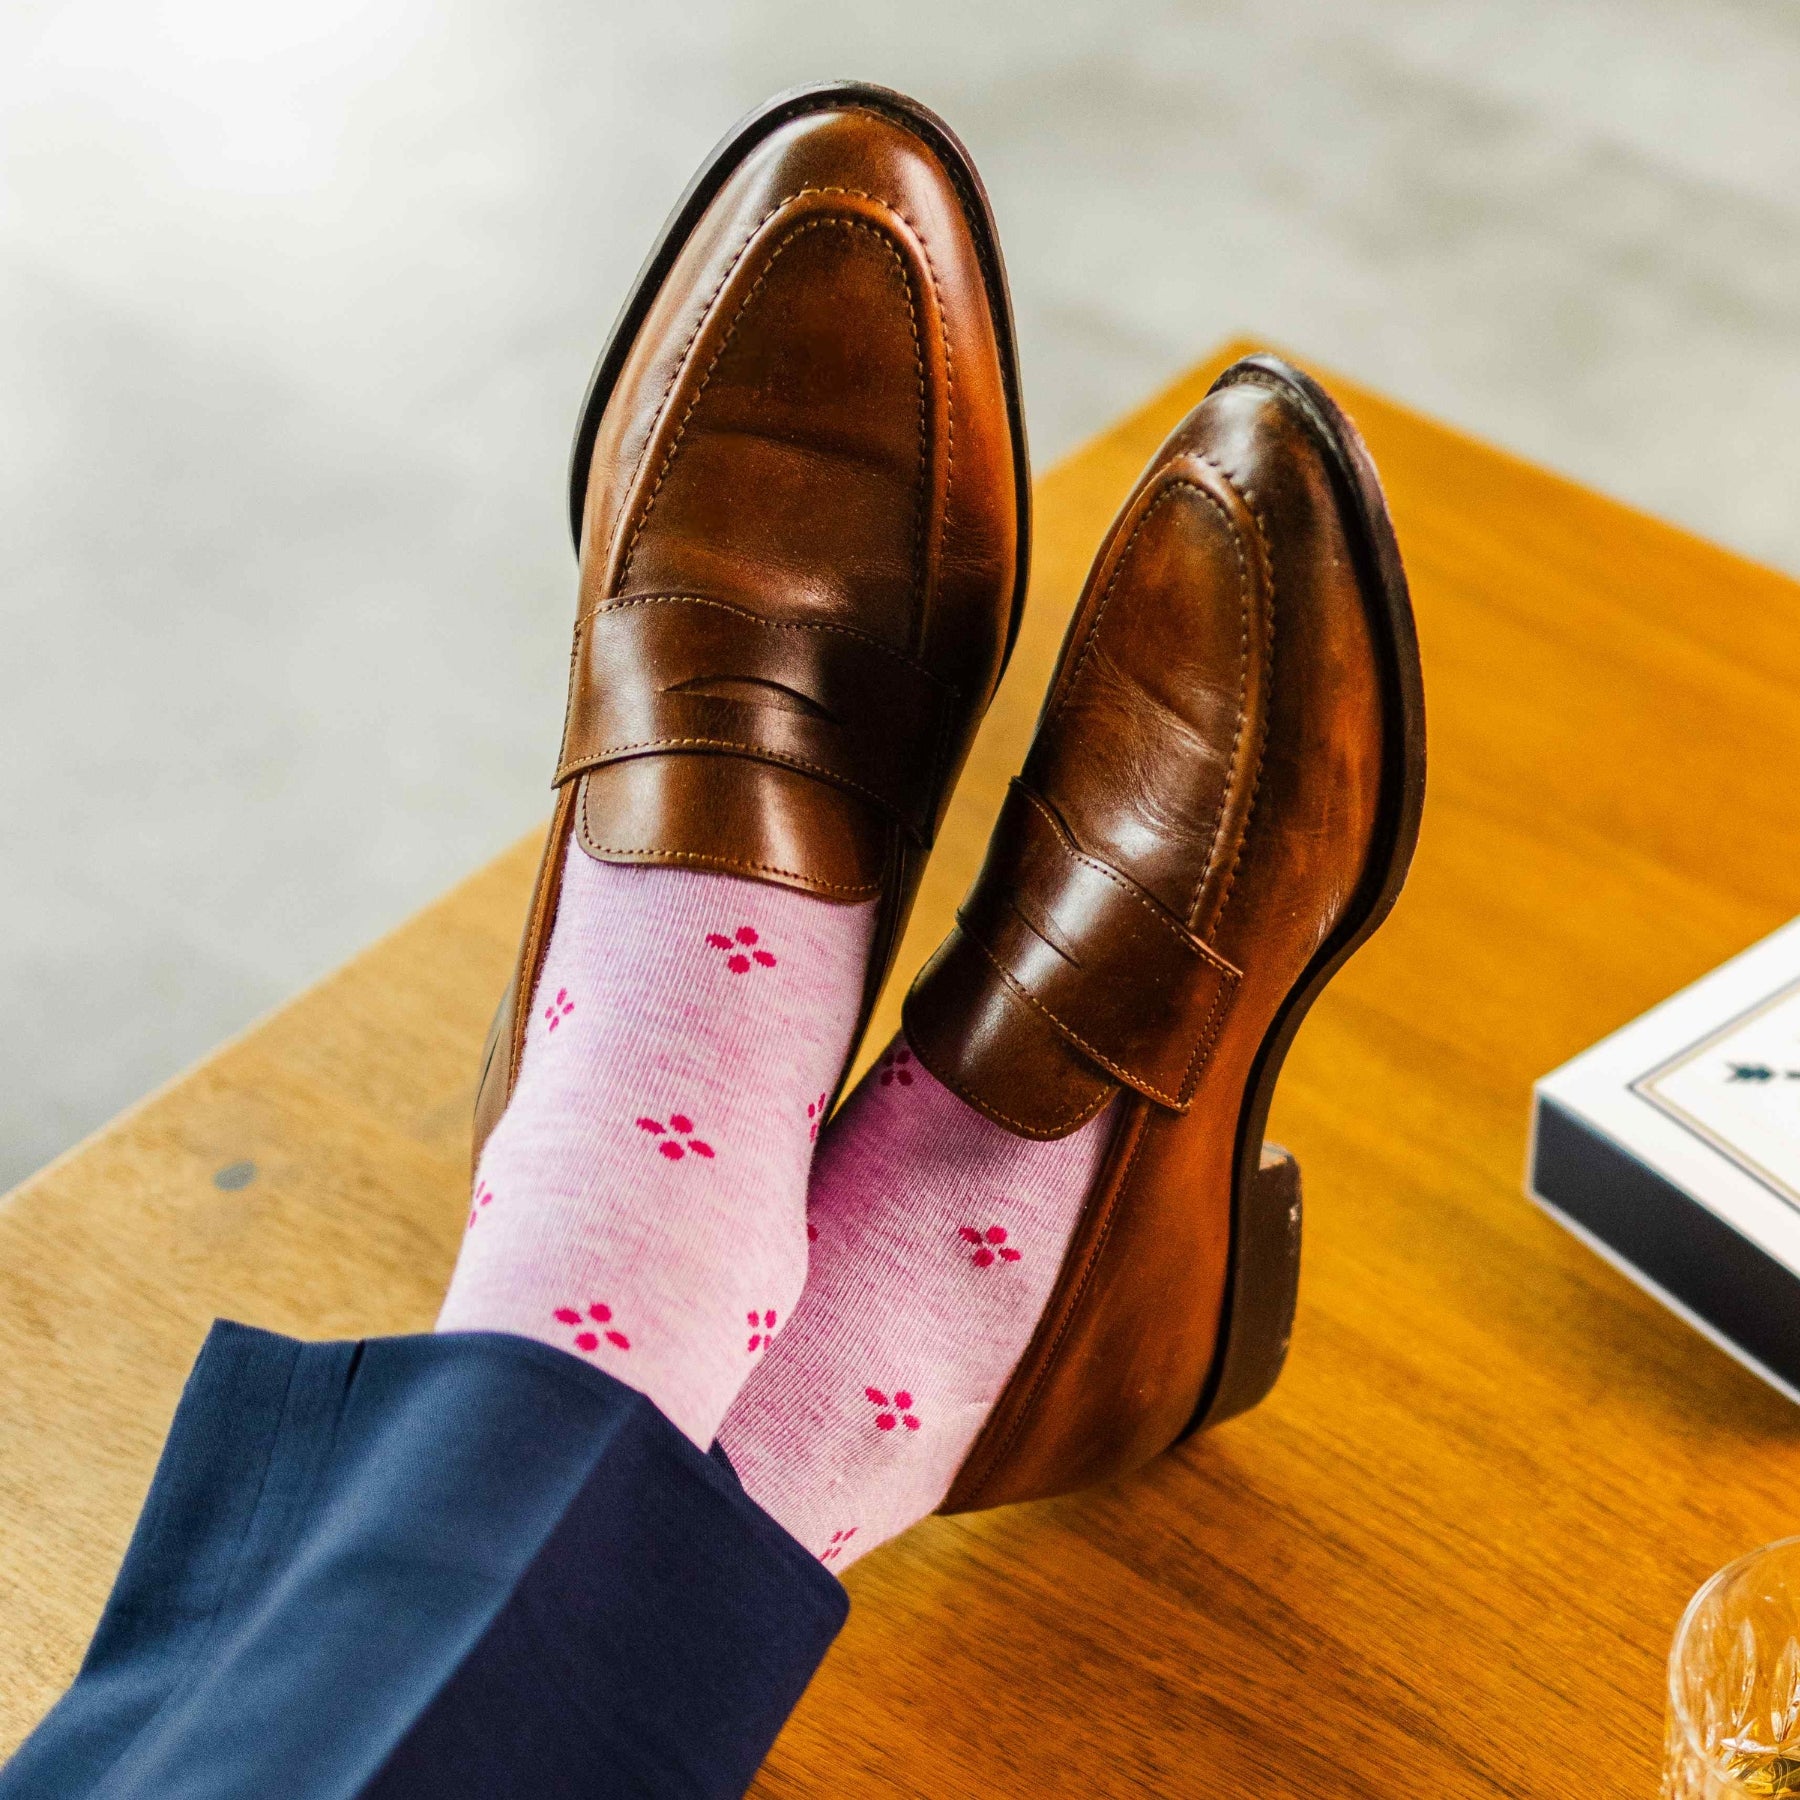 Heathered pink men's dress socks with a fuchsia flower pattern